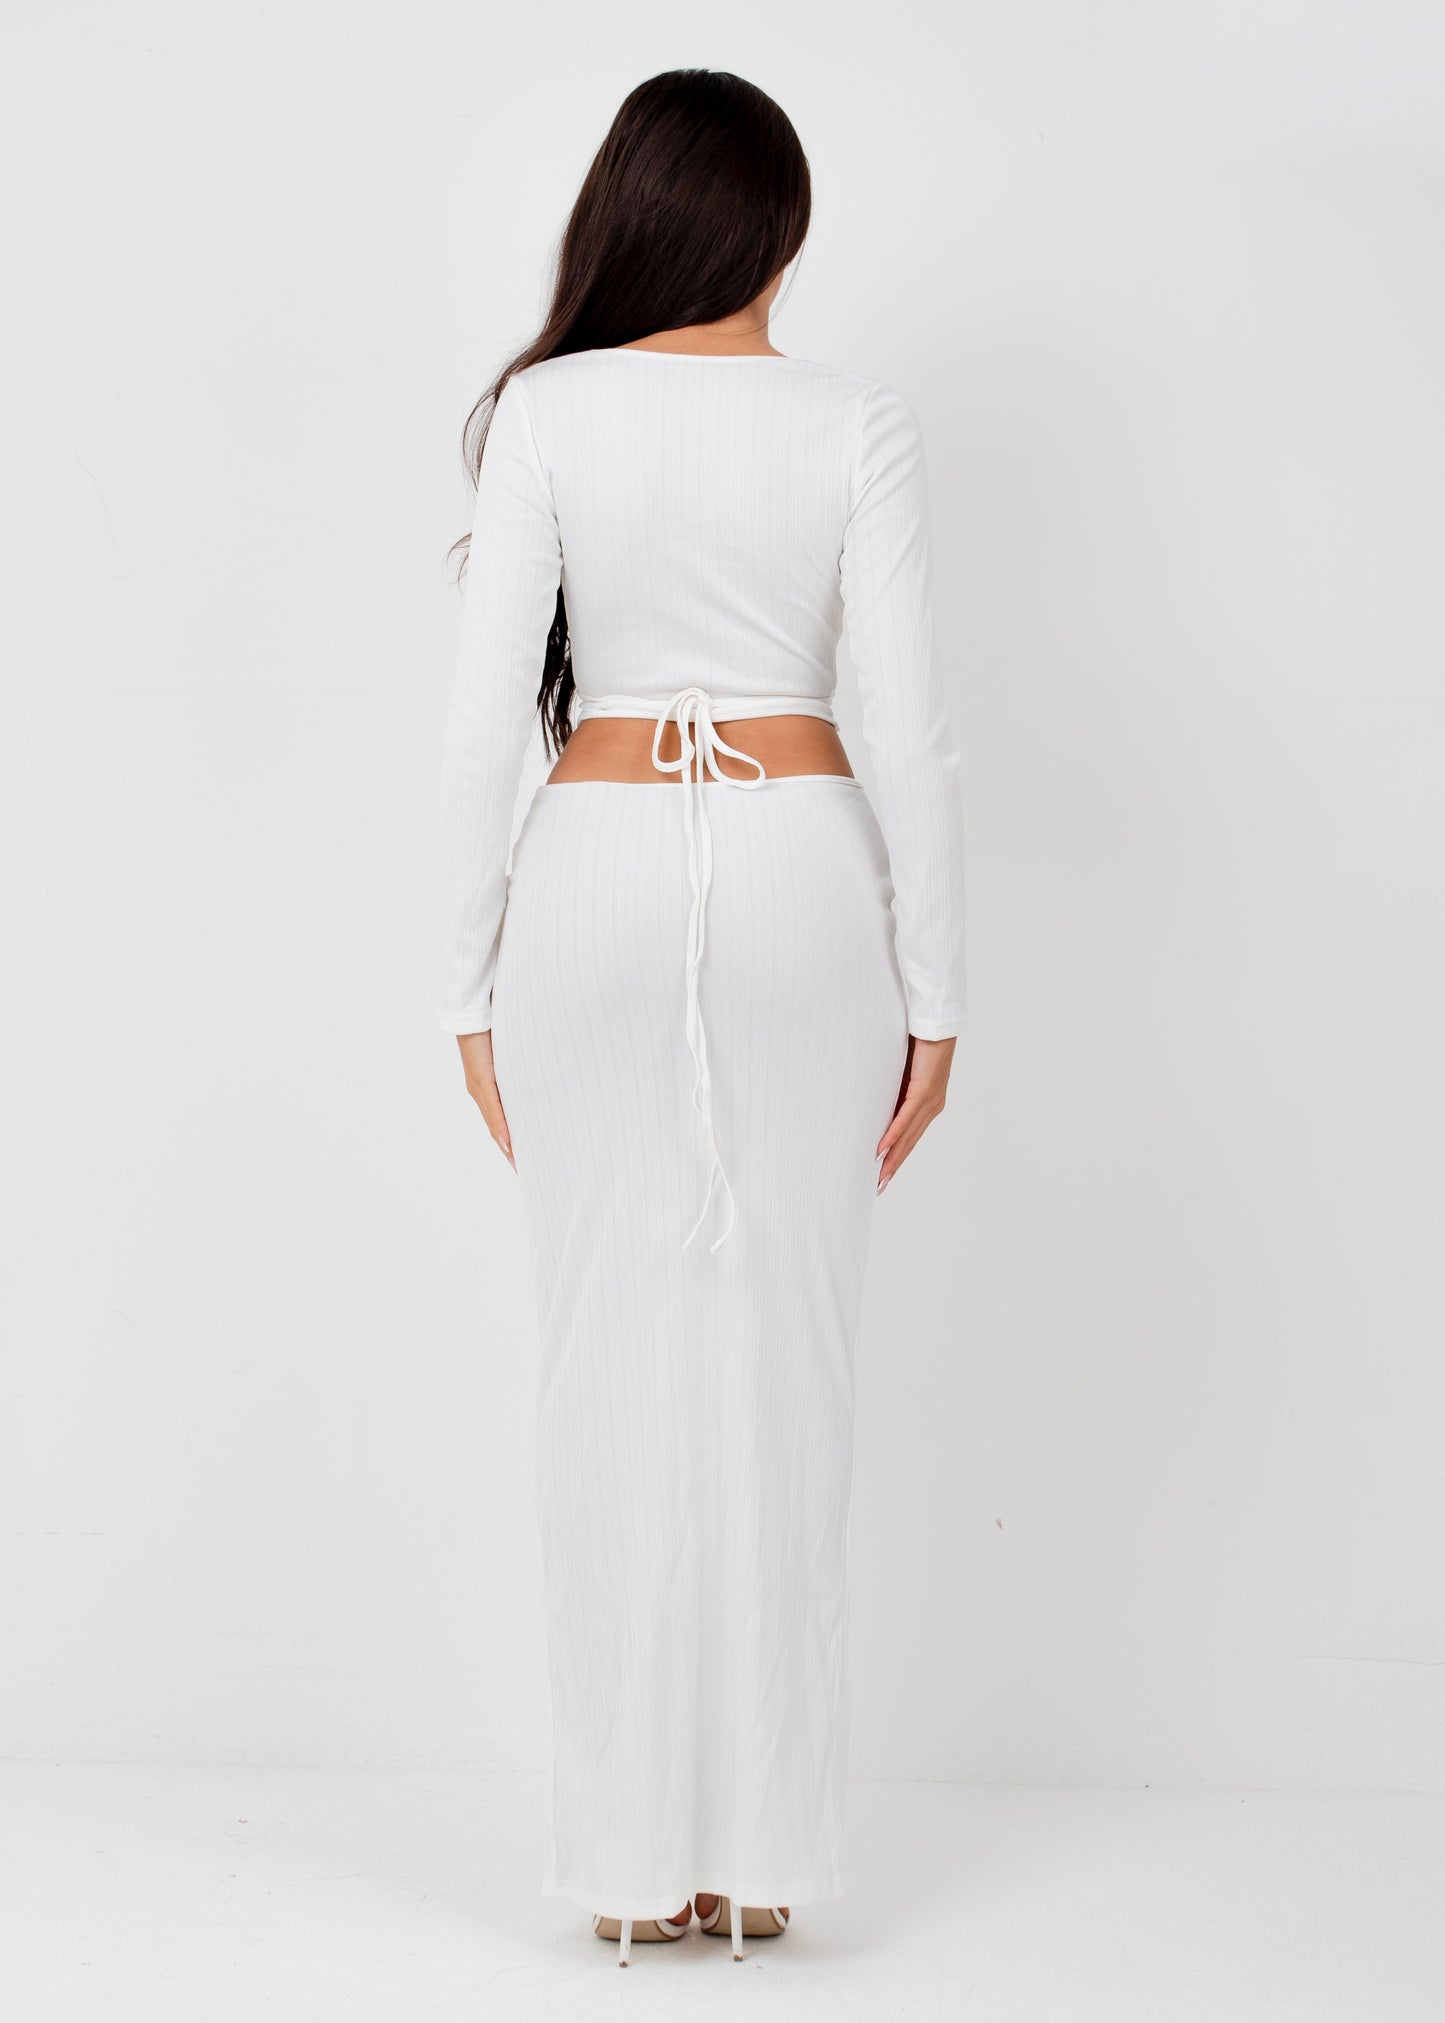 CHANTELLA - White Maxi Dress